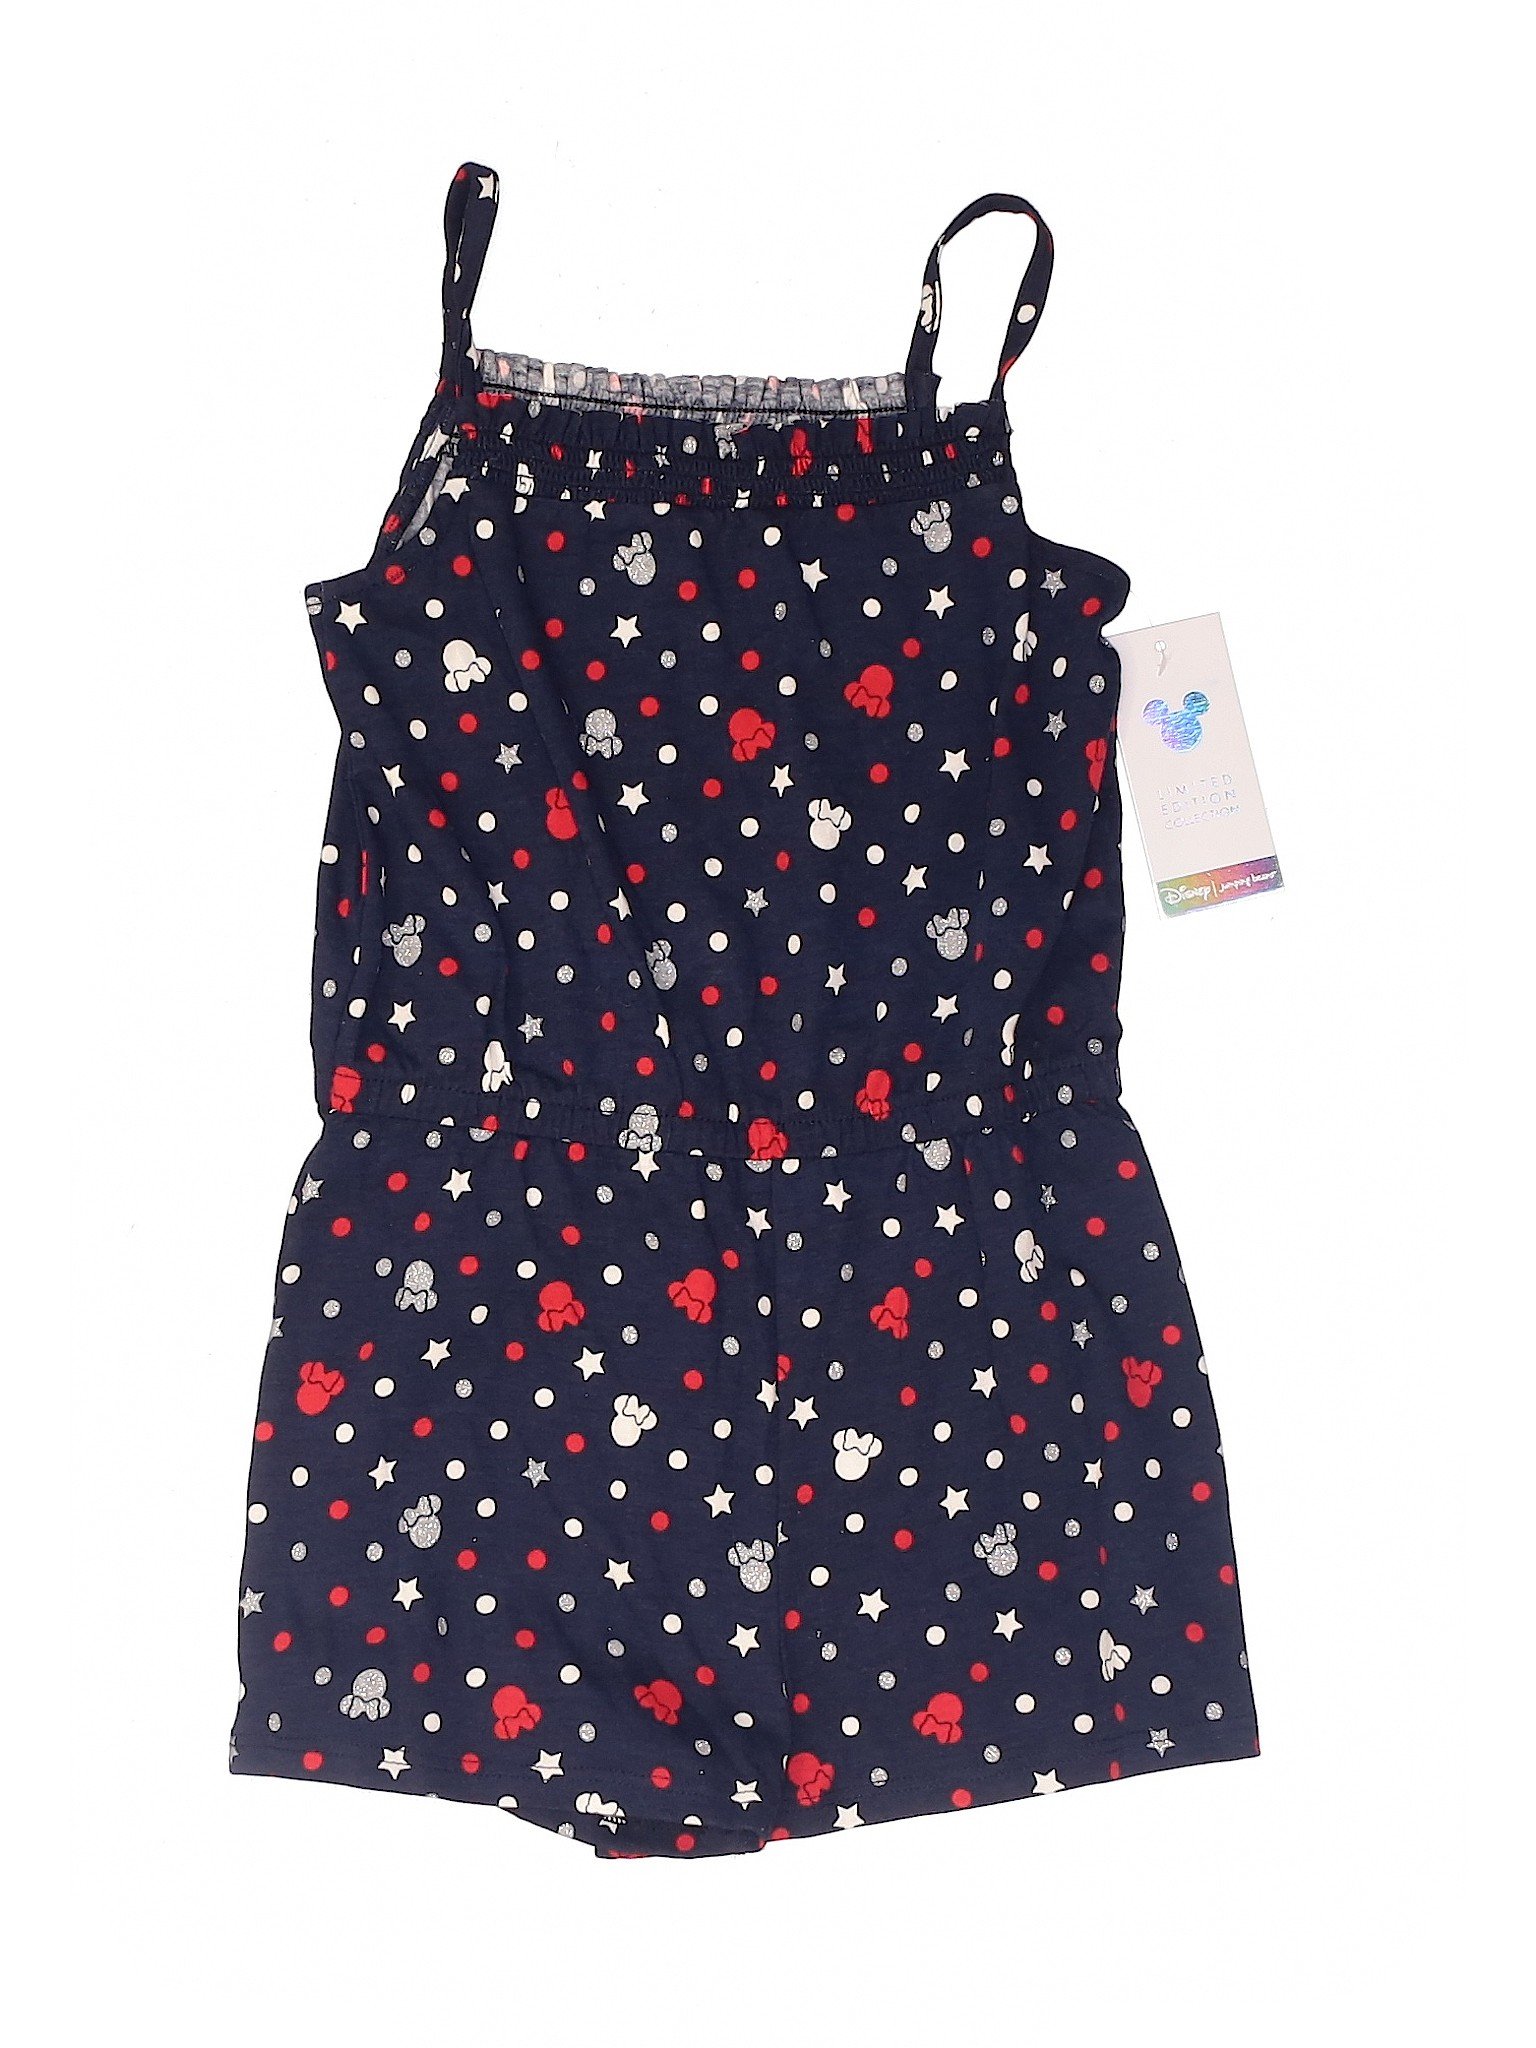 red and white polka dot maxi dress